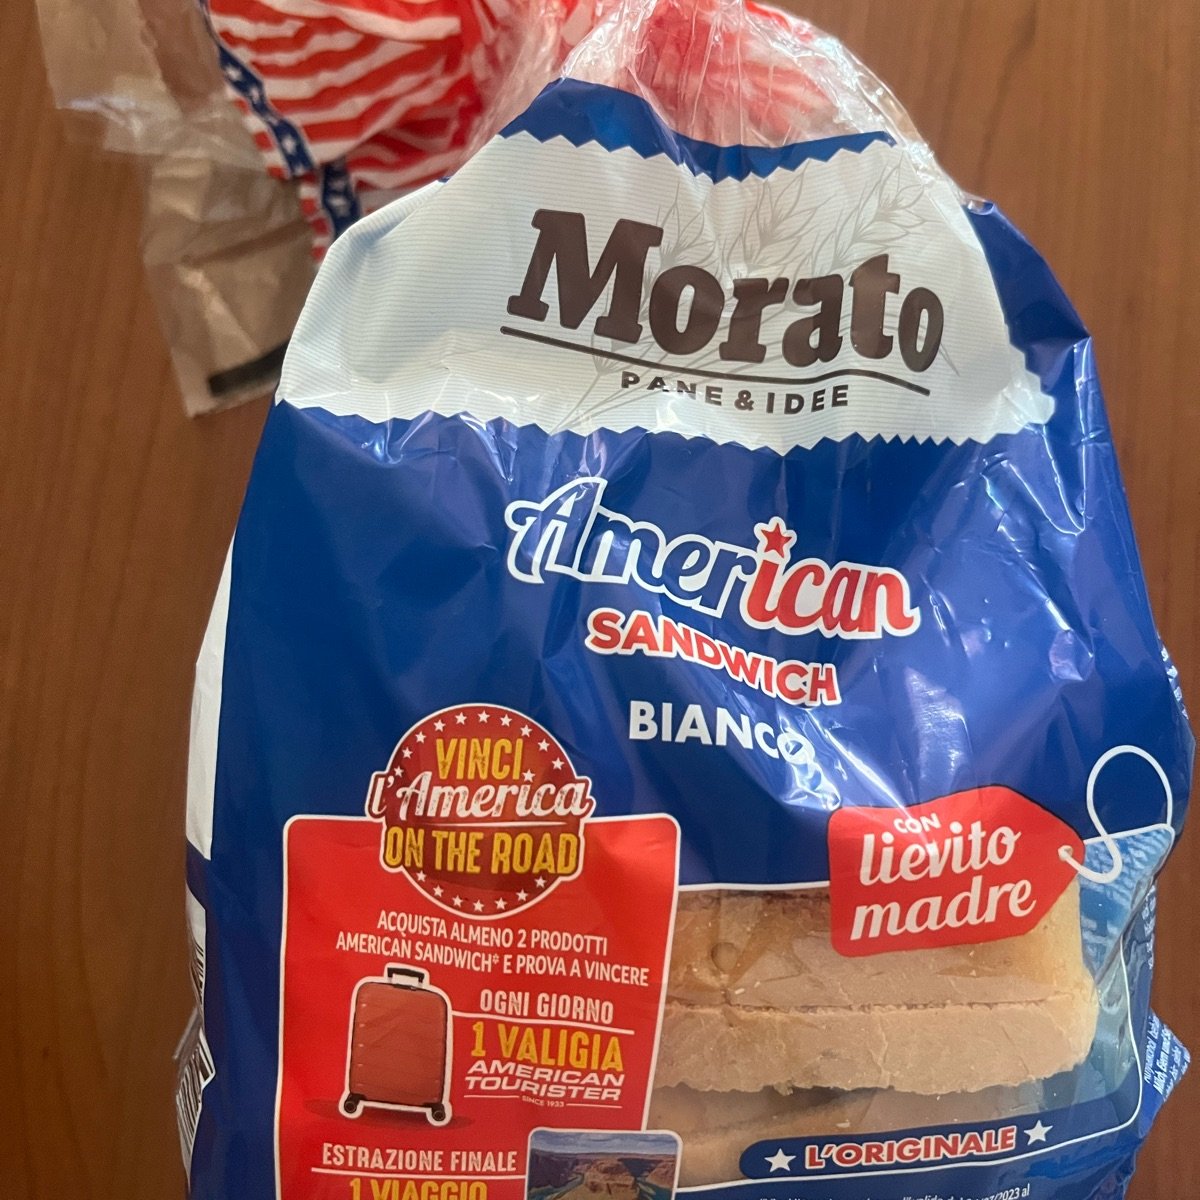 Morato American sandwich bianco Reviews